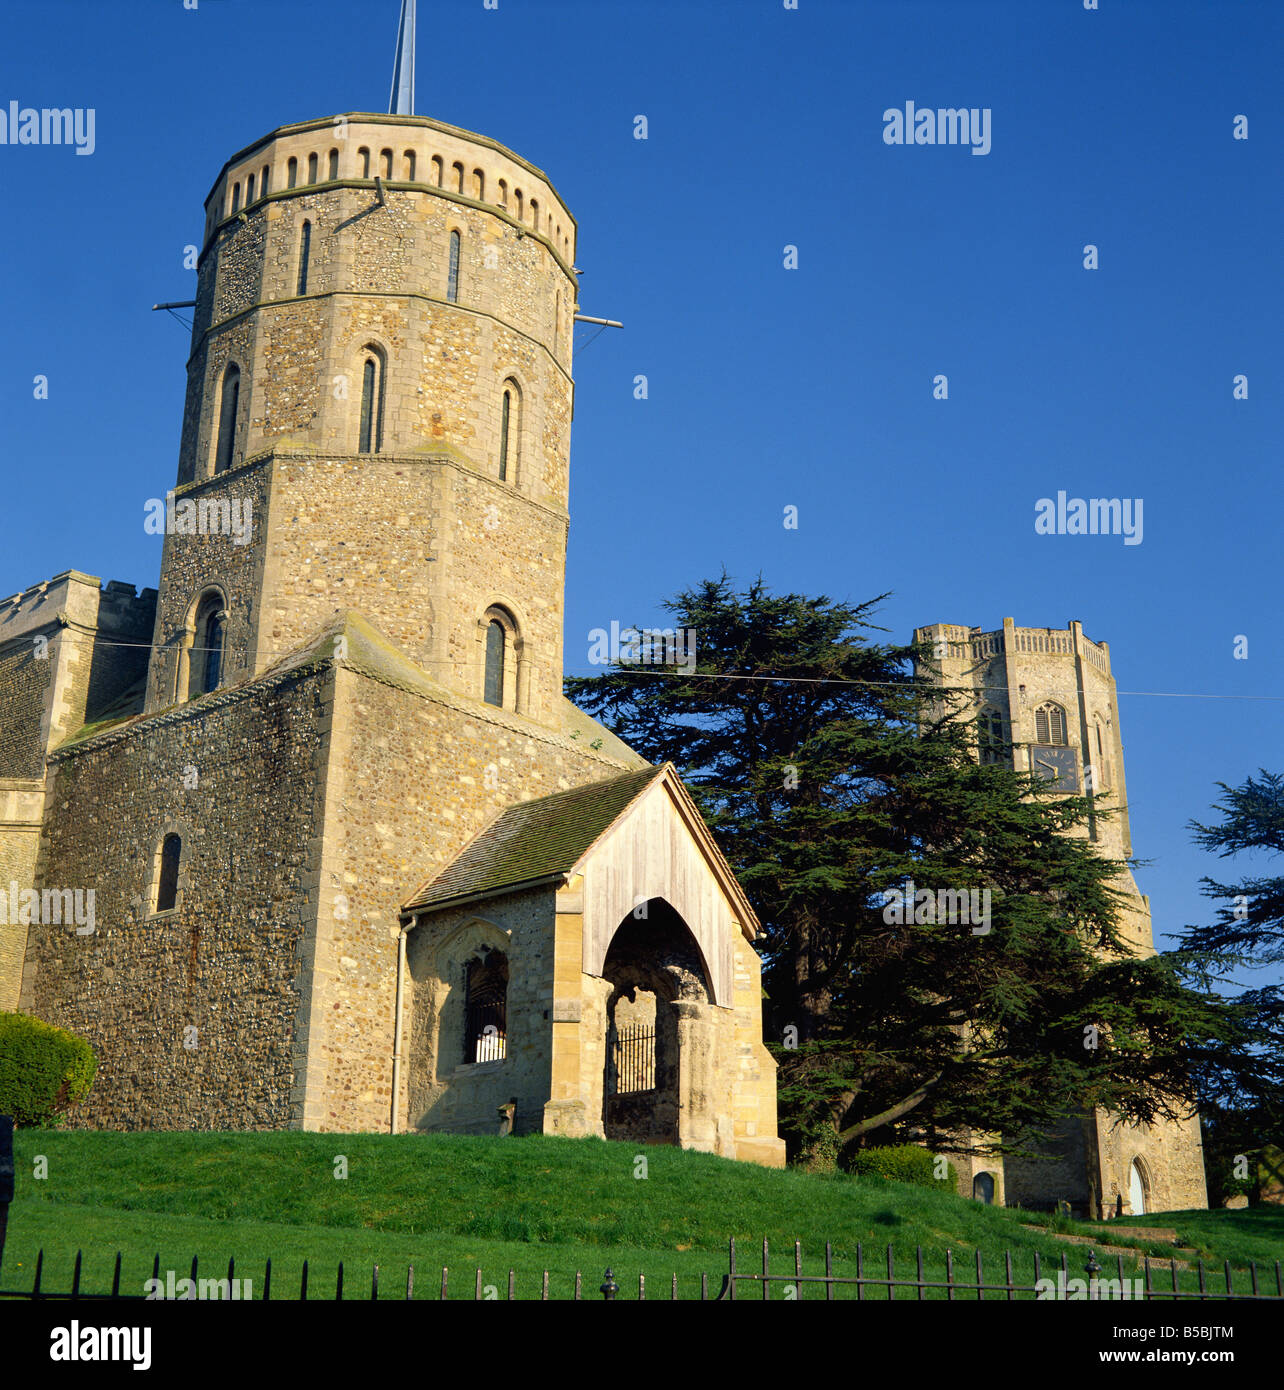 Two churches, Swaffham Prior, Cambridgeshire, England, Europe Stock Photo